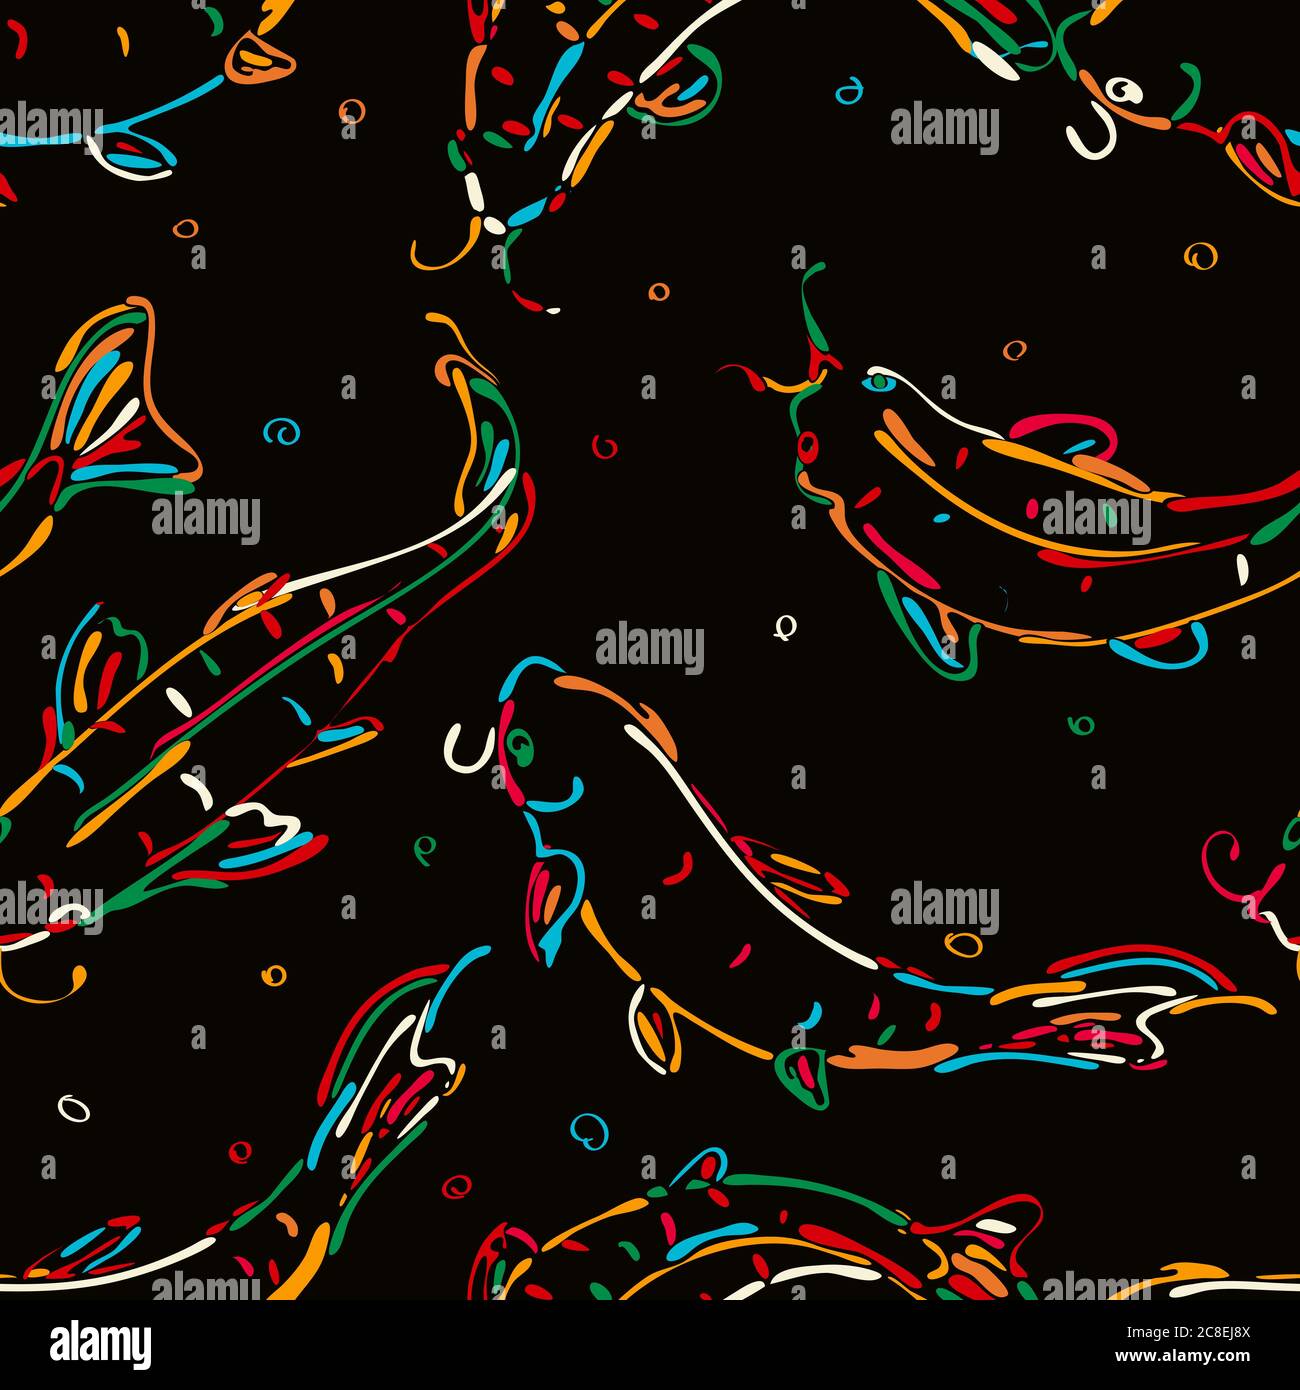 Stylized koi fish background patternin colors, vector illustration Stock Vector